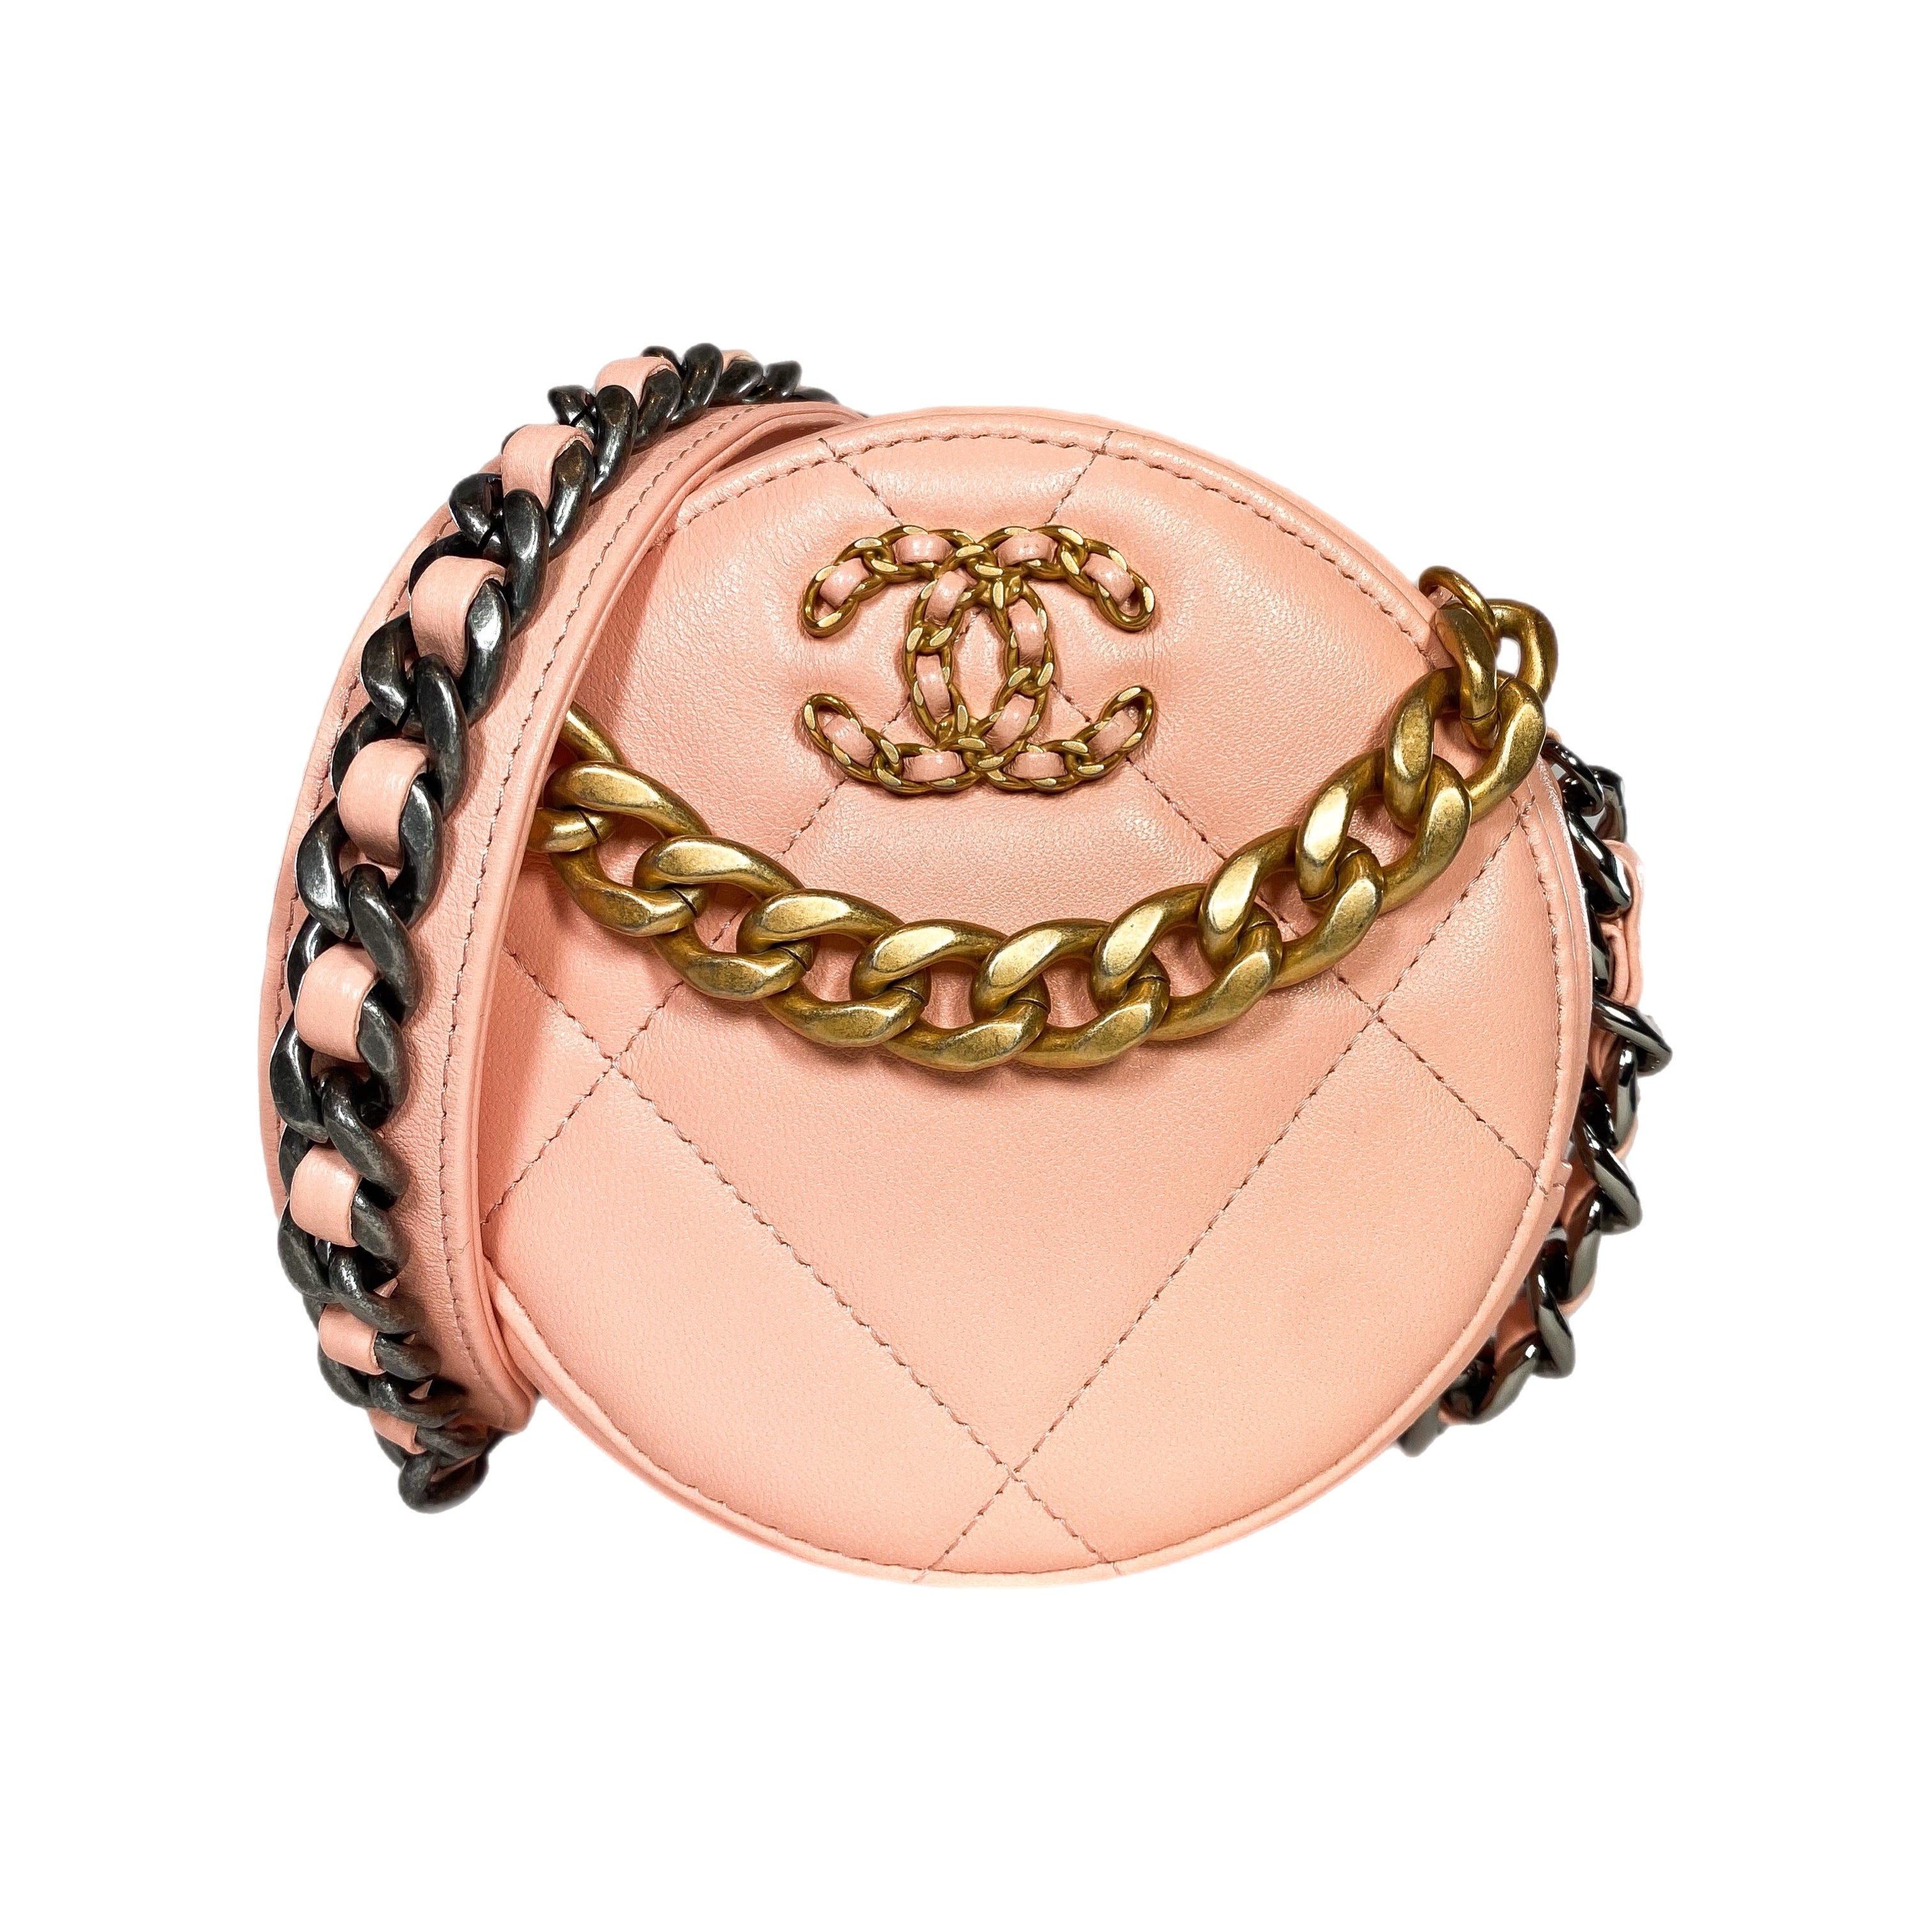 Chanel 19 Peach Round Clutch with Chain